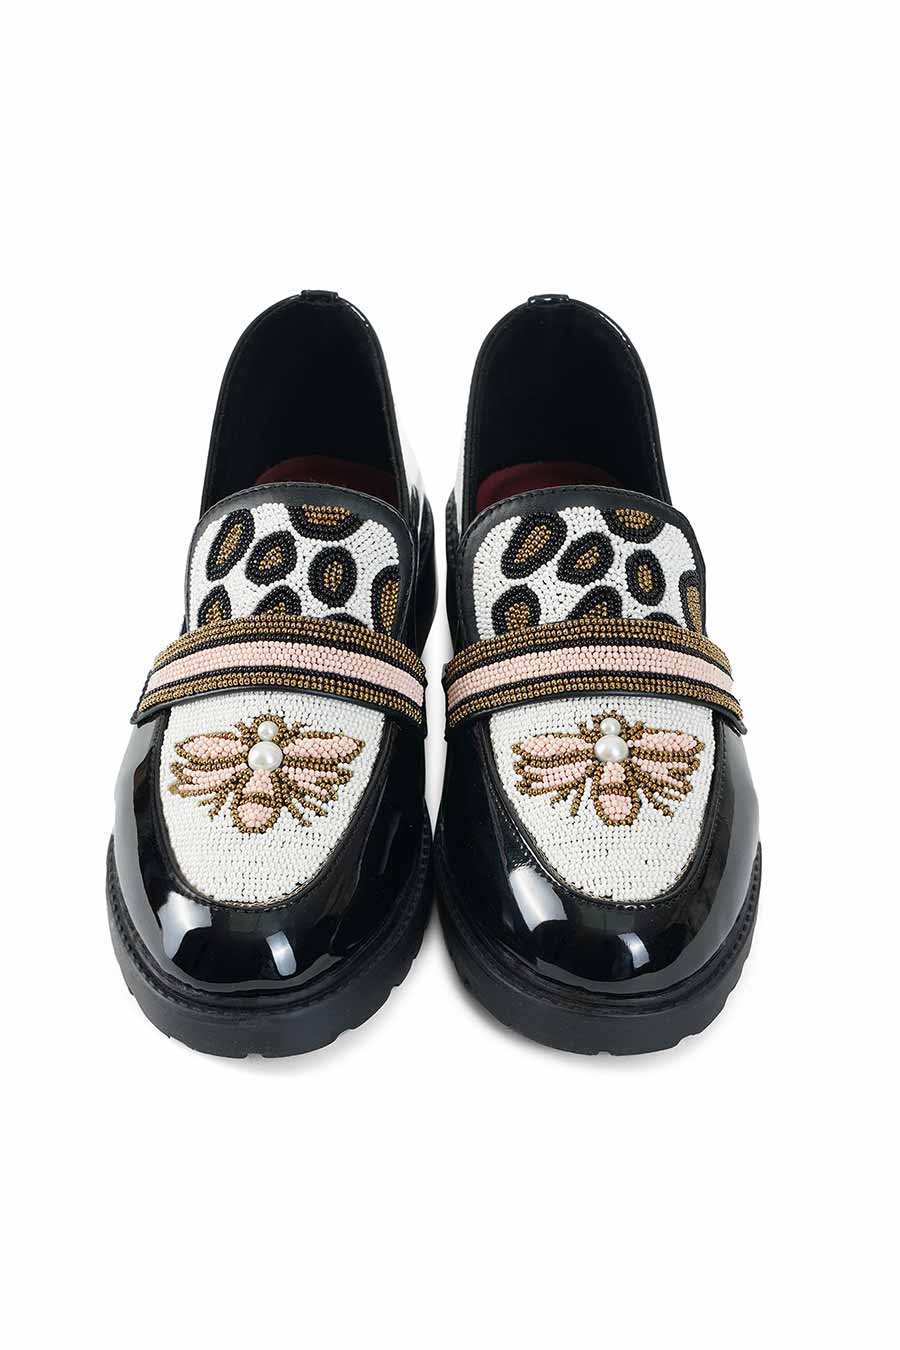 North Black Patent Embellished Loafers